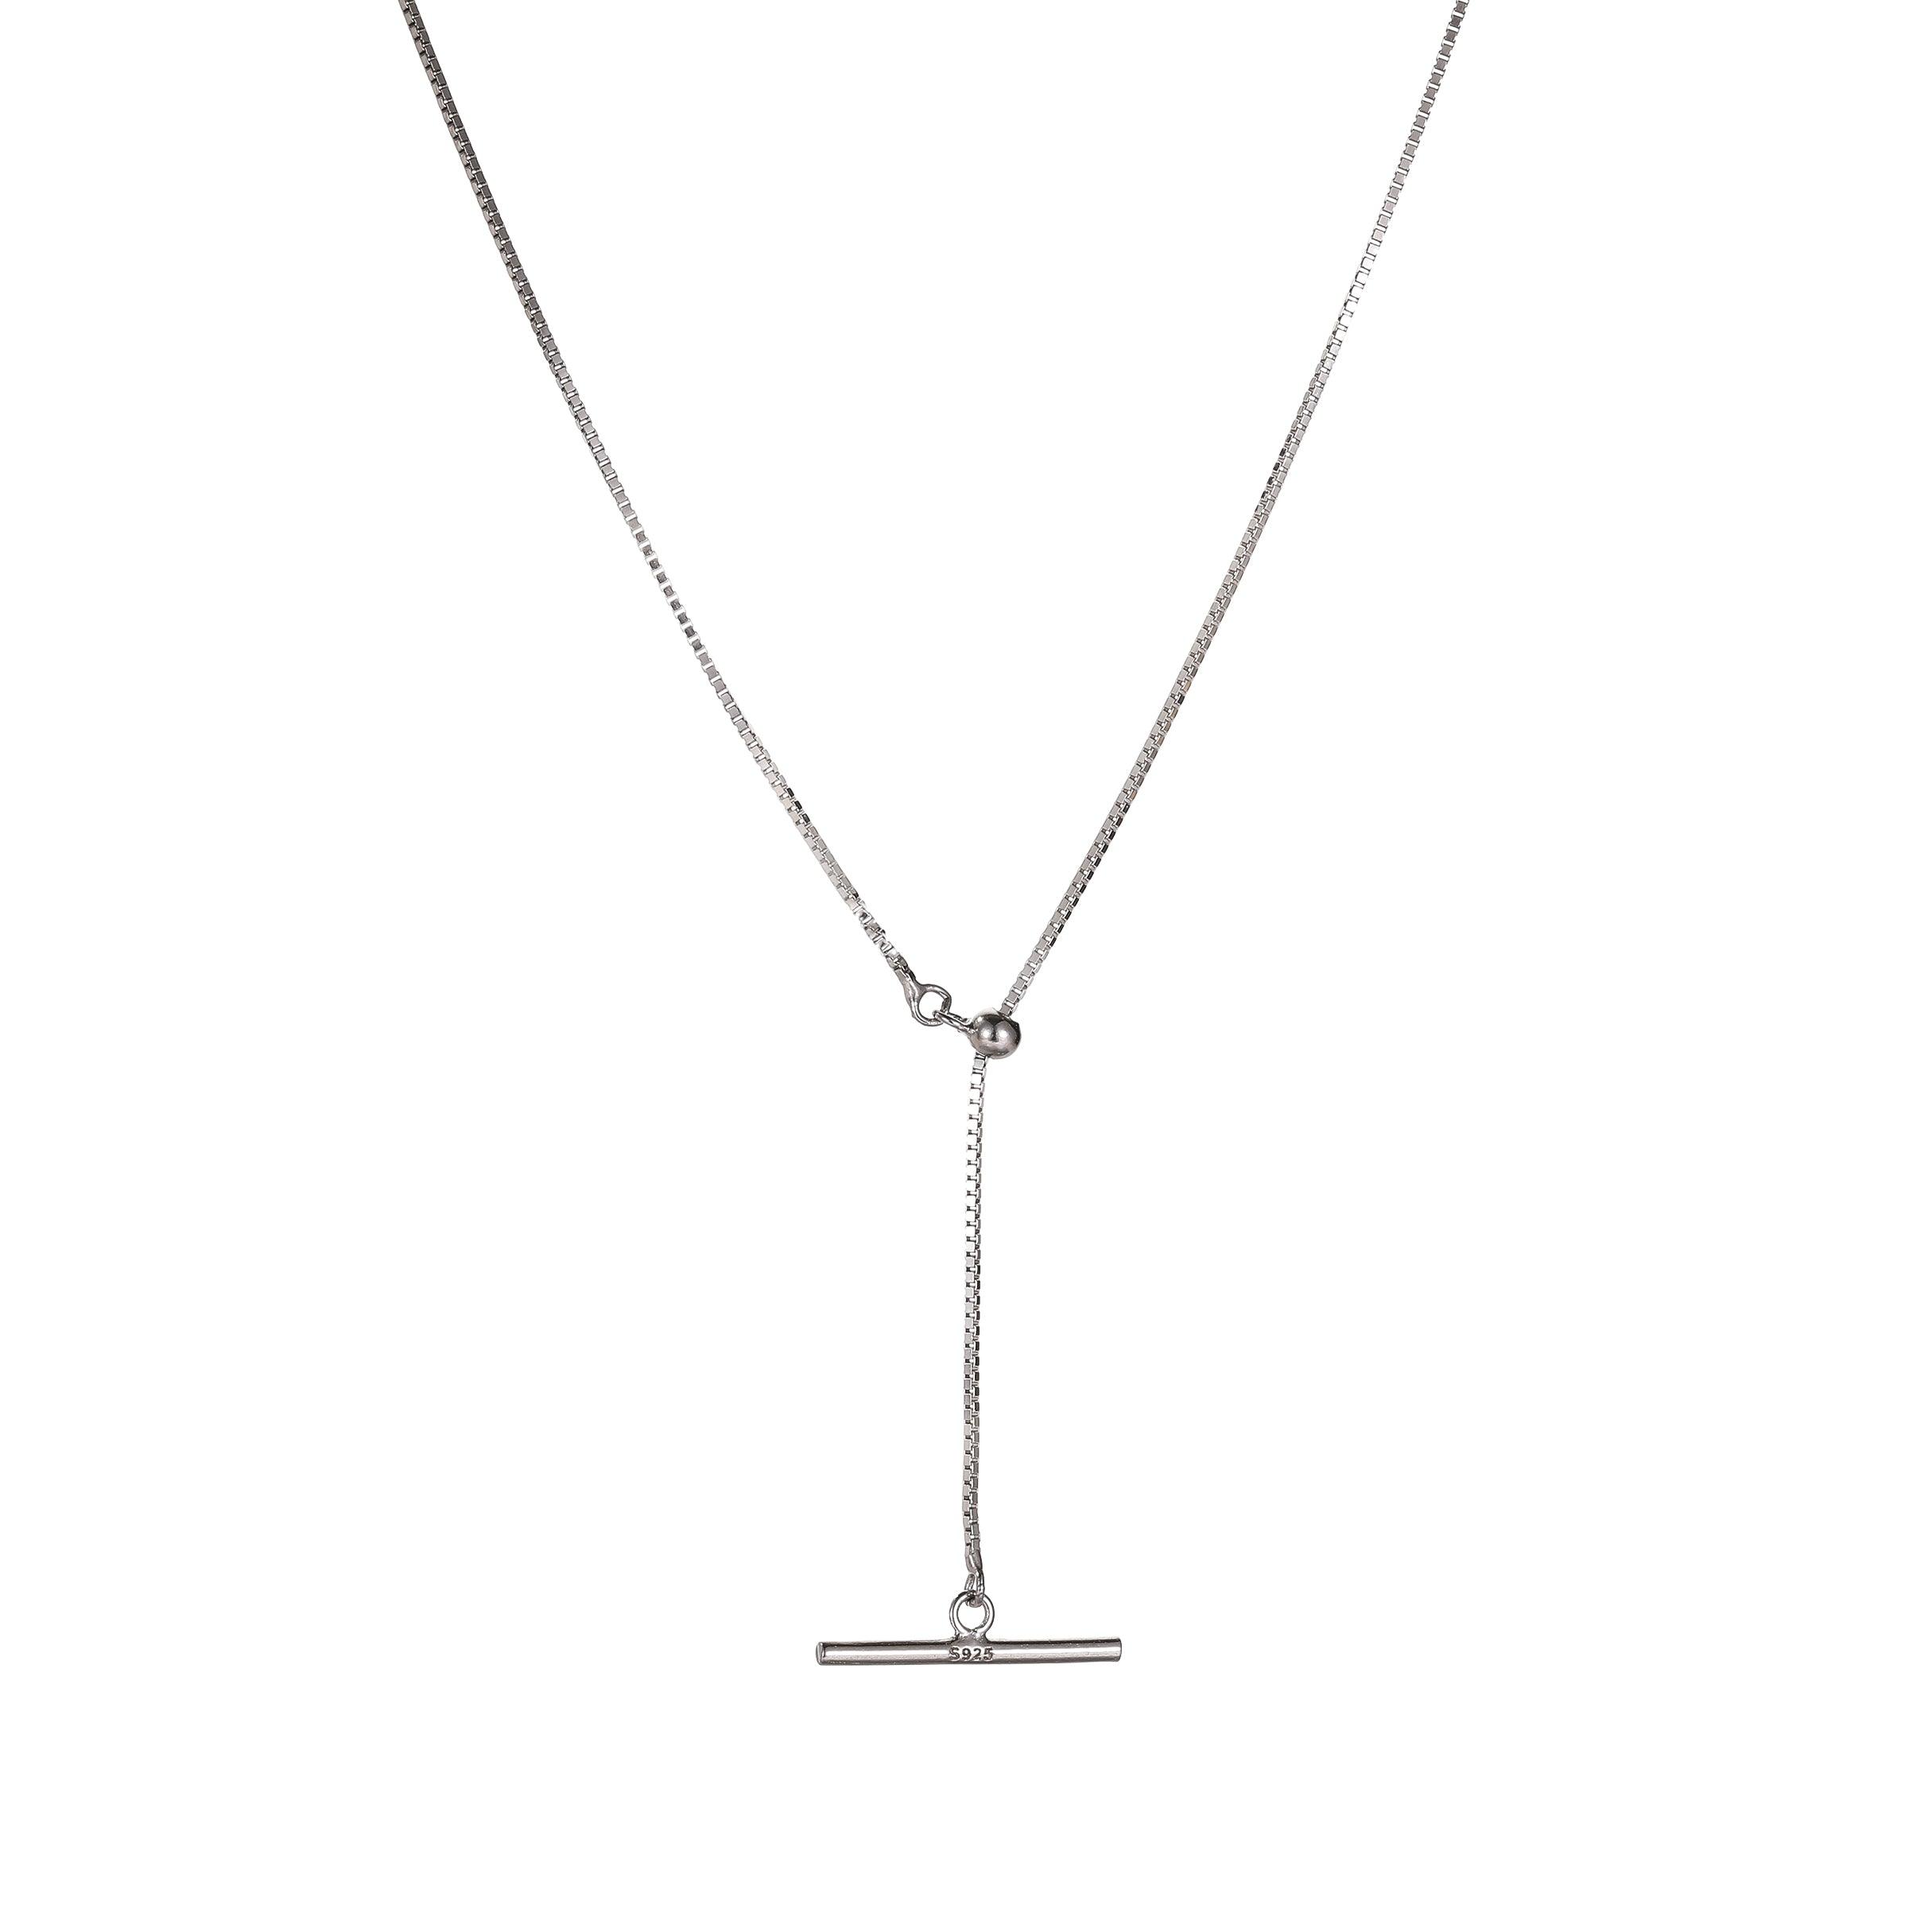 Adjustable Length Stick Sterling Silver Necklace - Uniqvibe